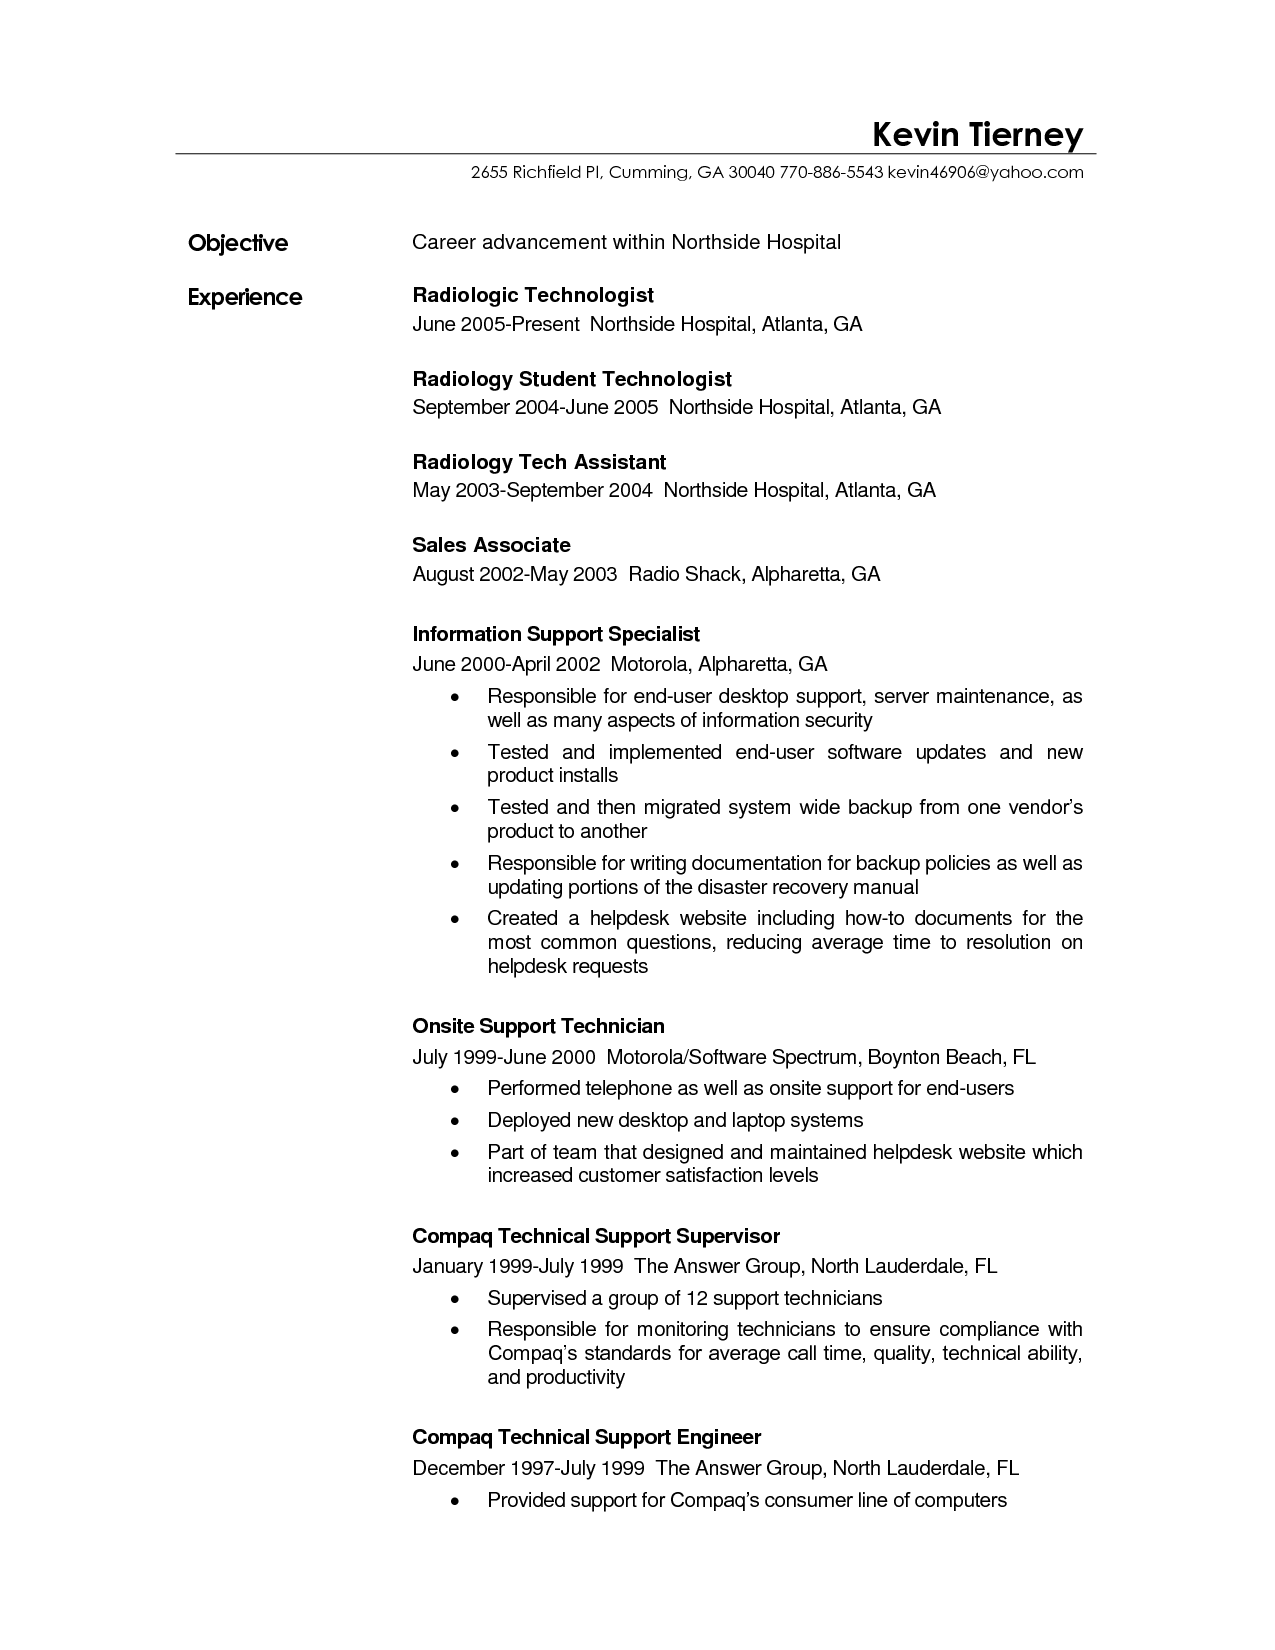 X Ray Technician Resume Format Resume Templates